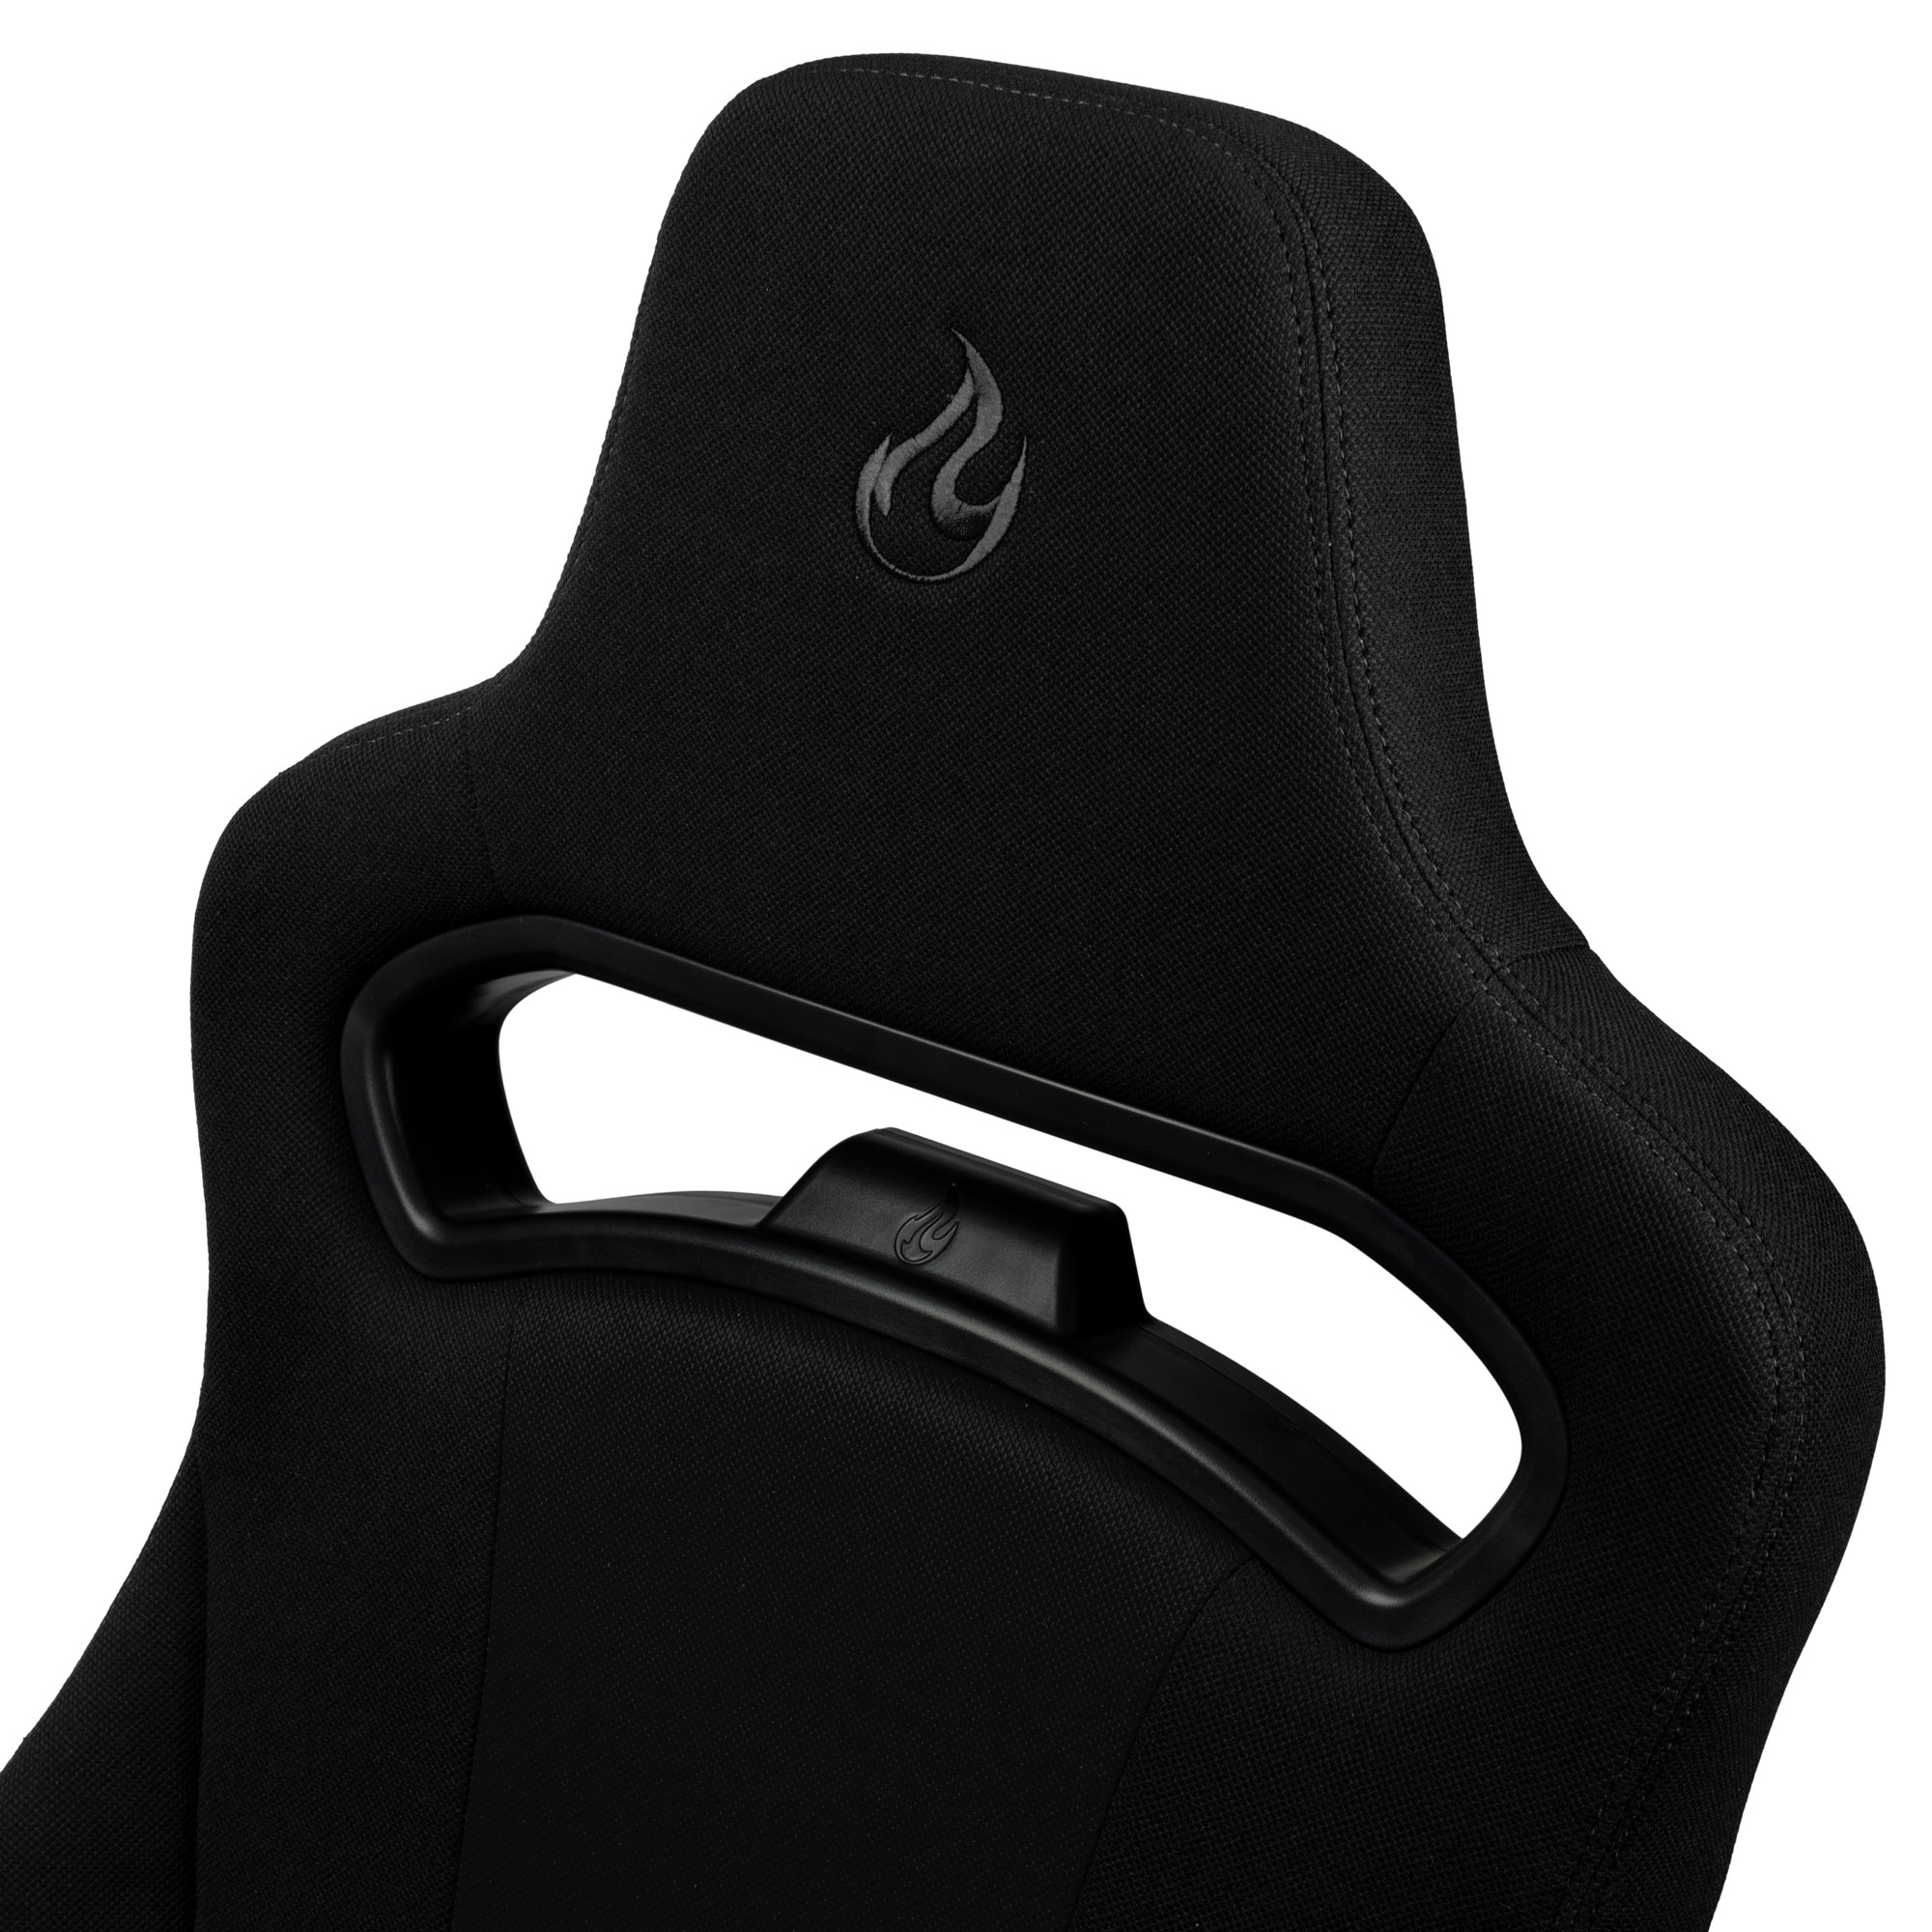 E250 Gaming Chair Black